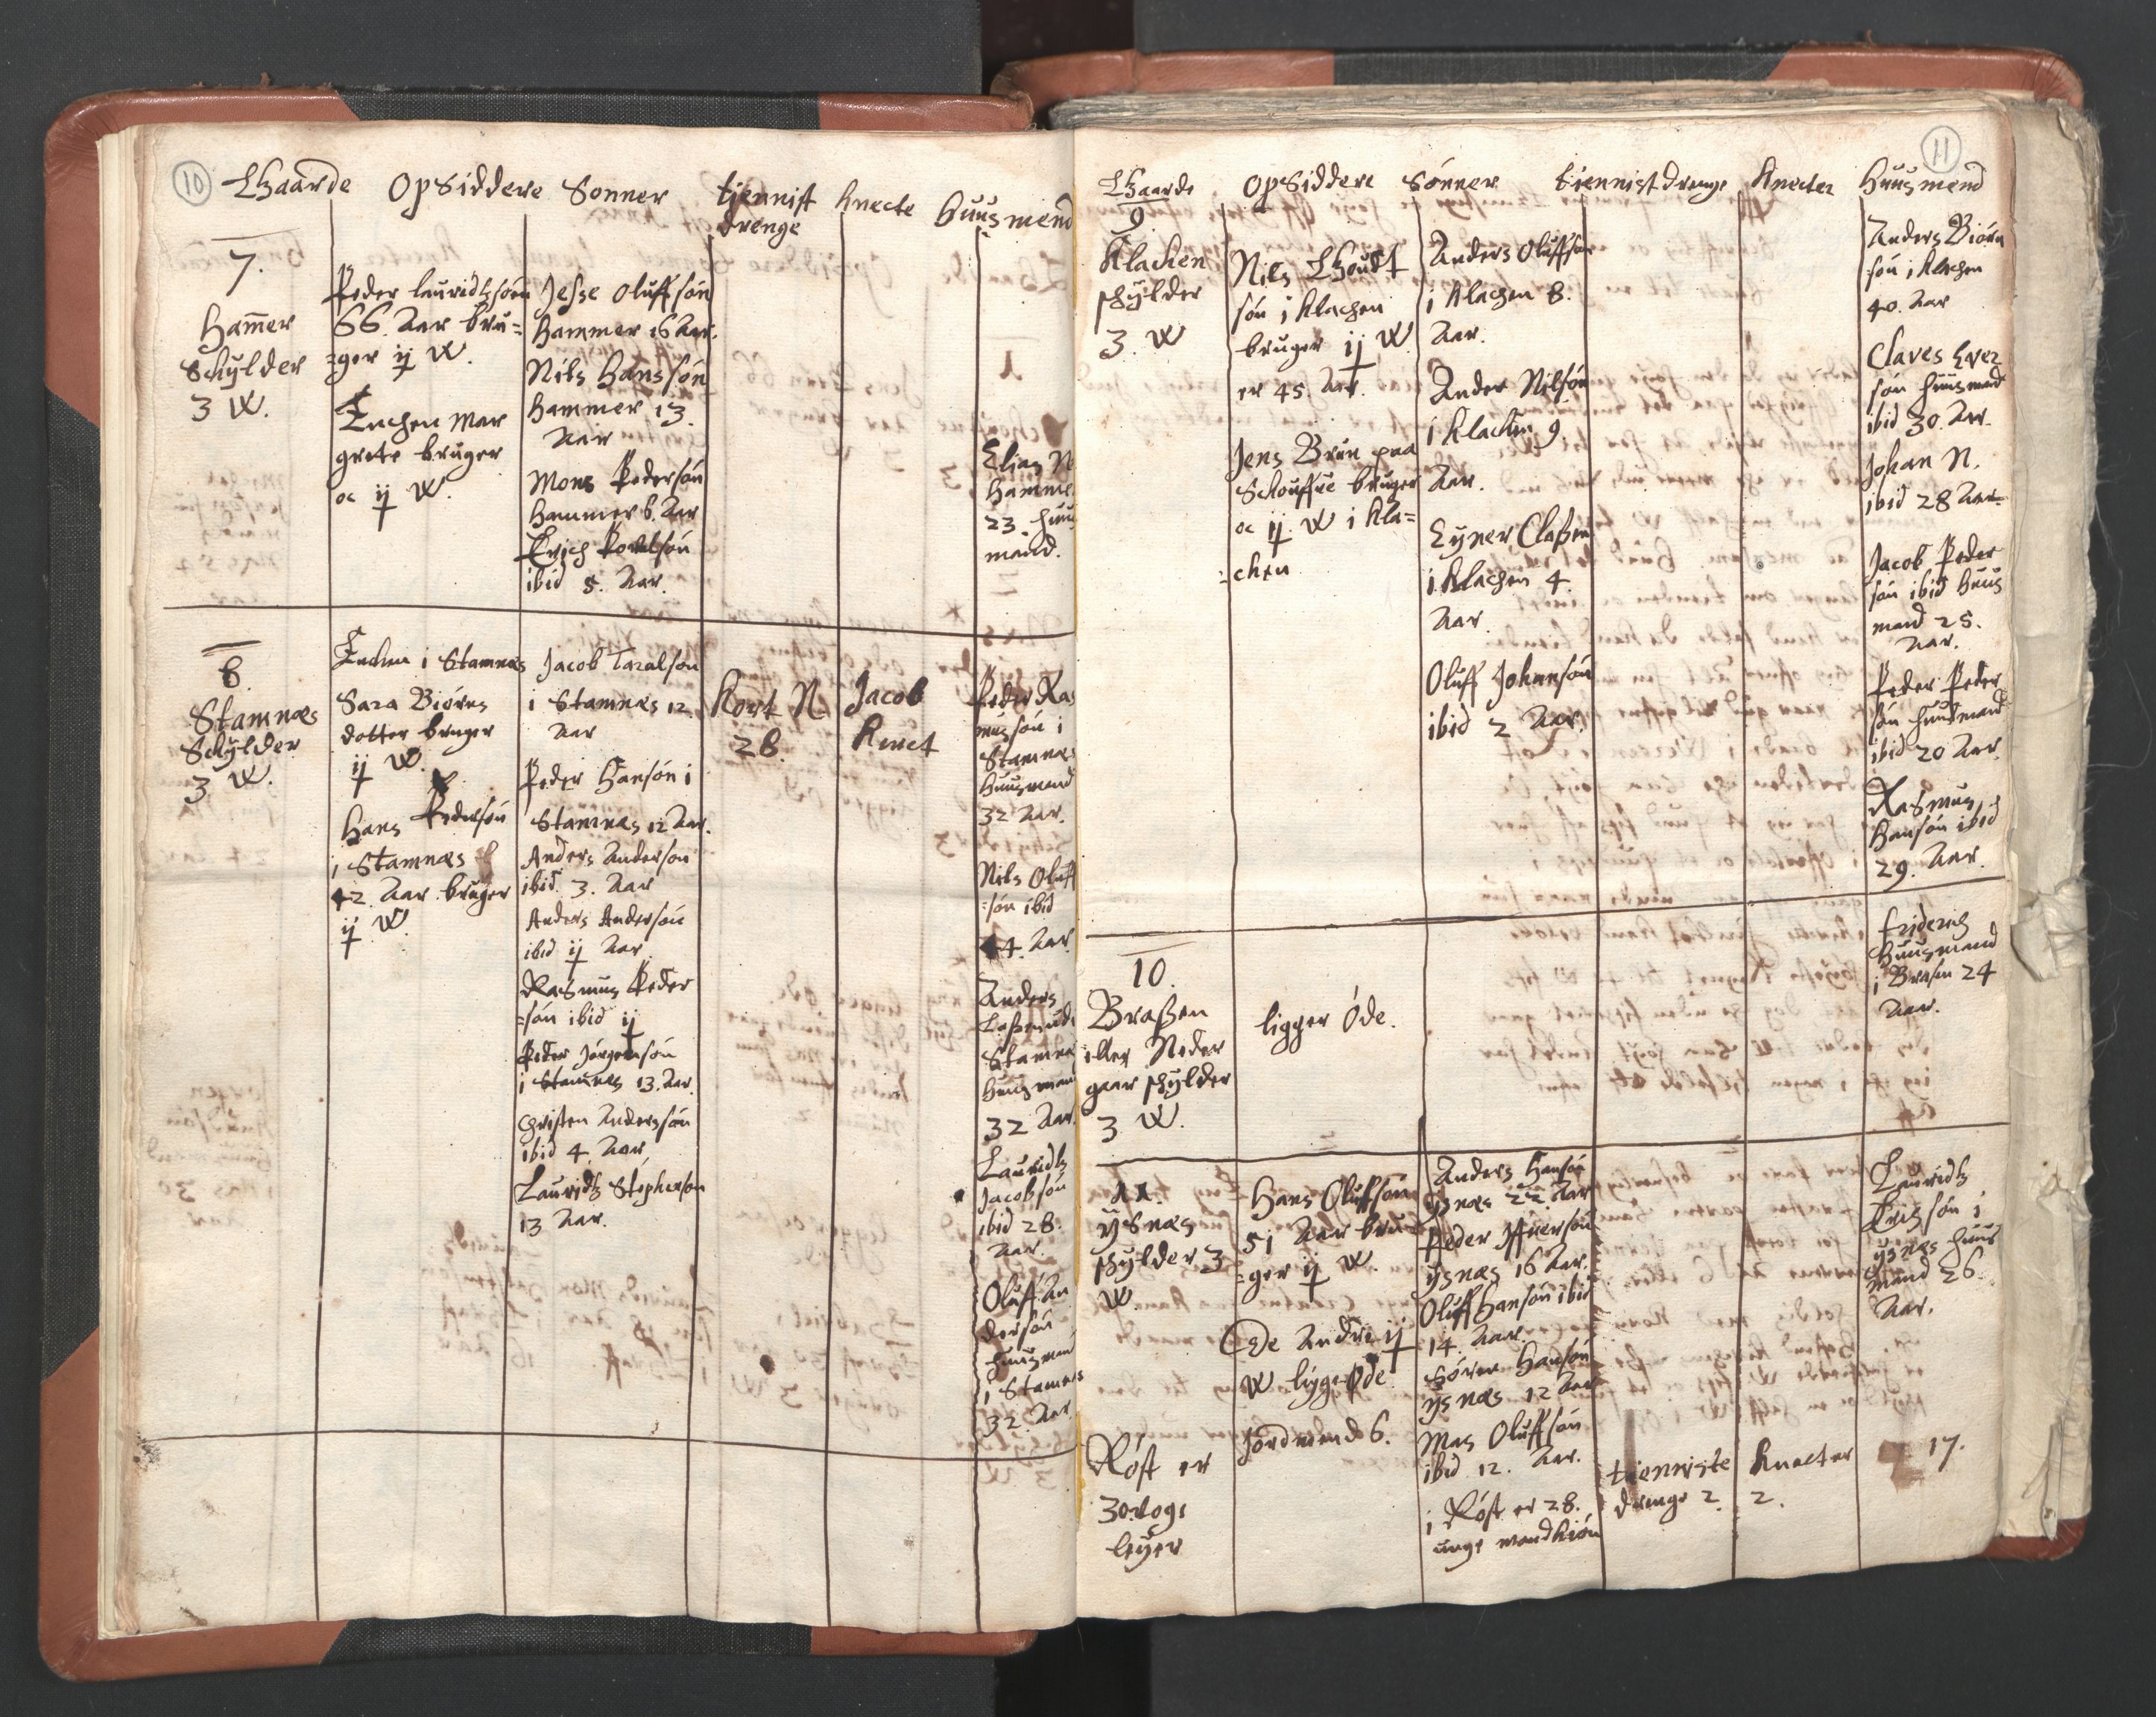 RA, Vicar's Census 1664-1666, no. 36: Lofoten and Vesterålen deanery, Senja deanery and Troms deanery, 1664-1666, p. 10-11